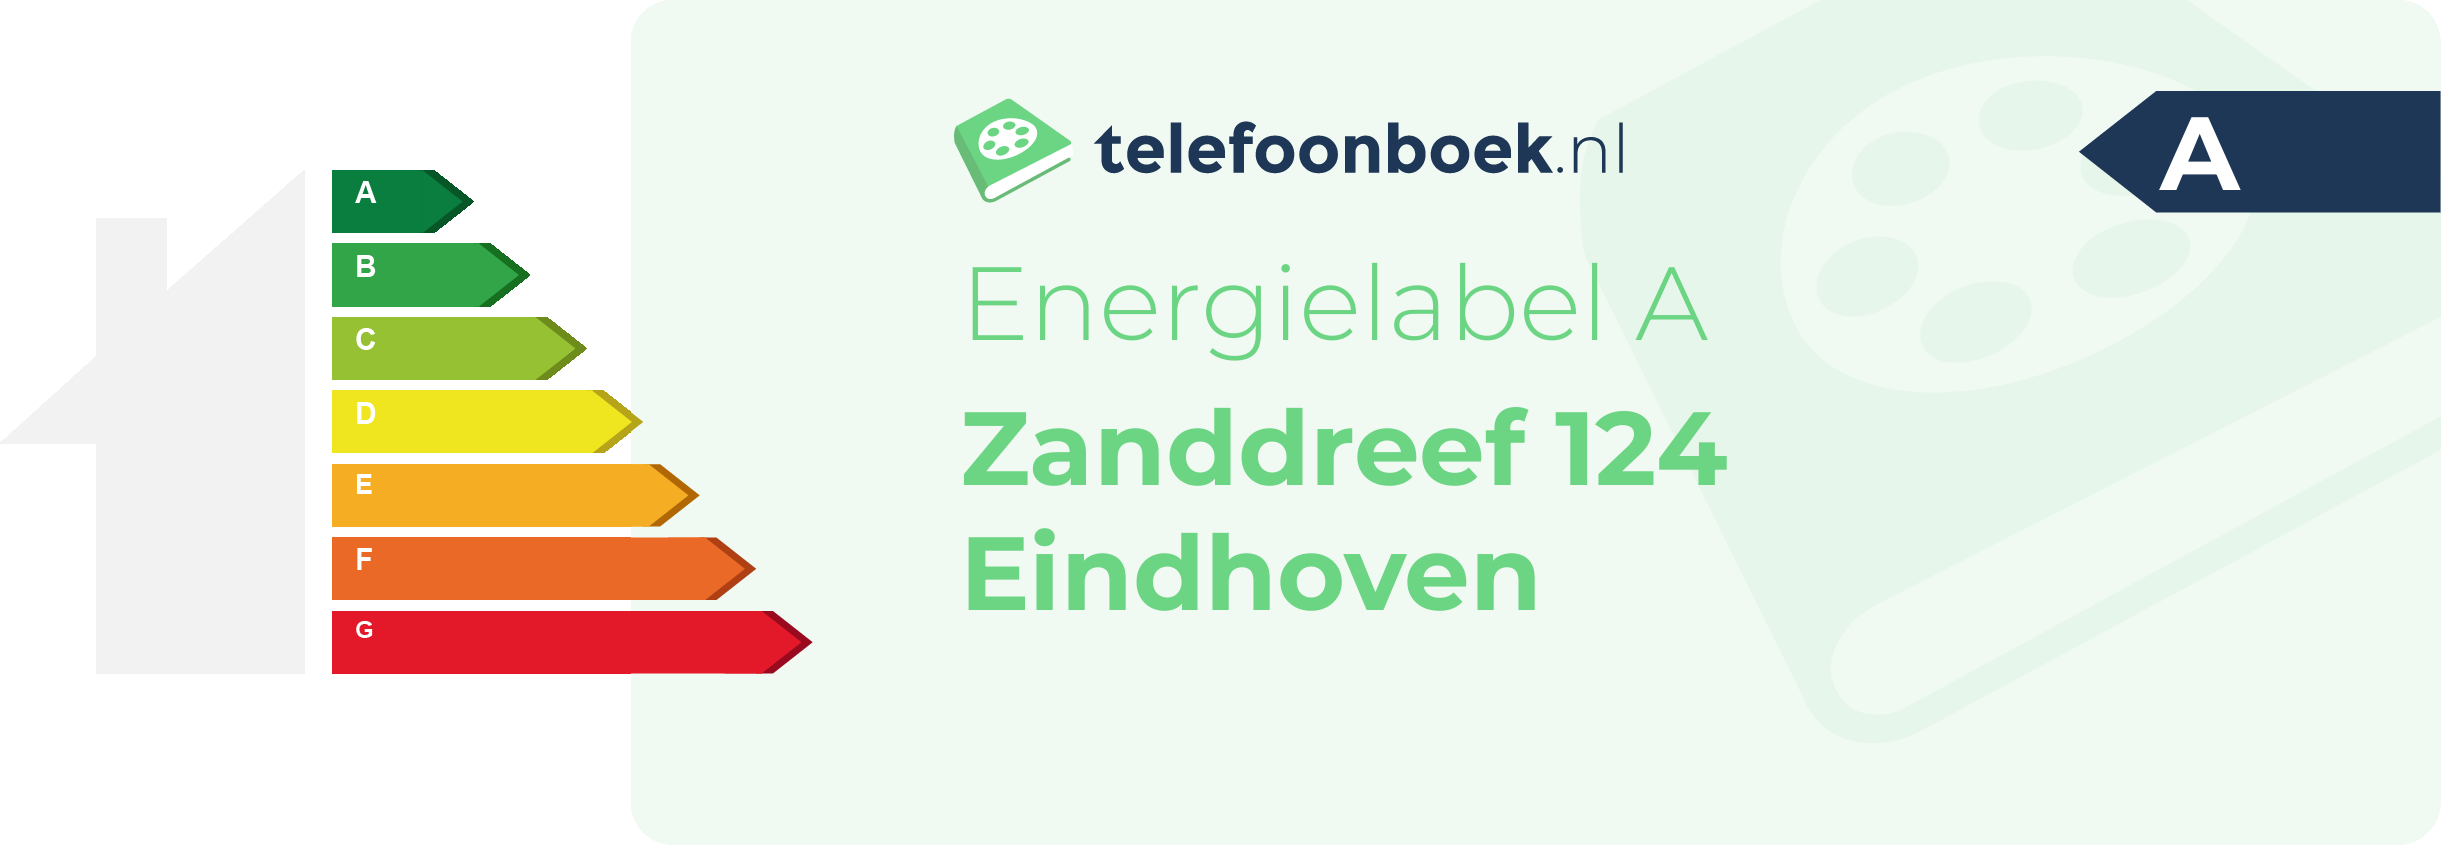 Energielabel Zanddreef 124 Eindhoven